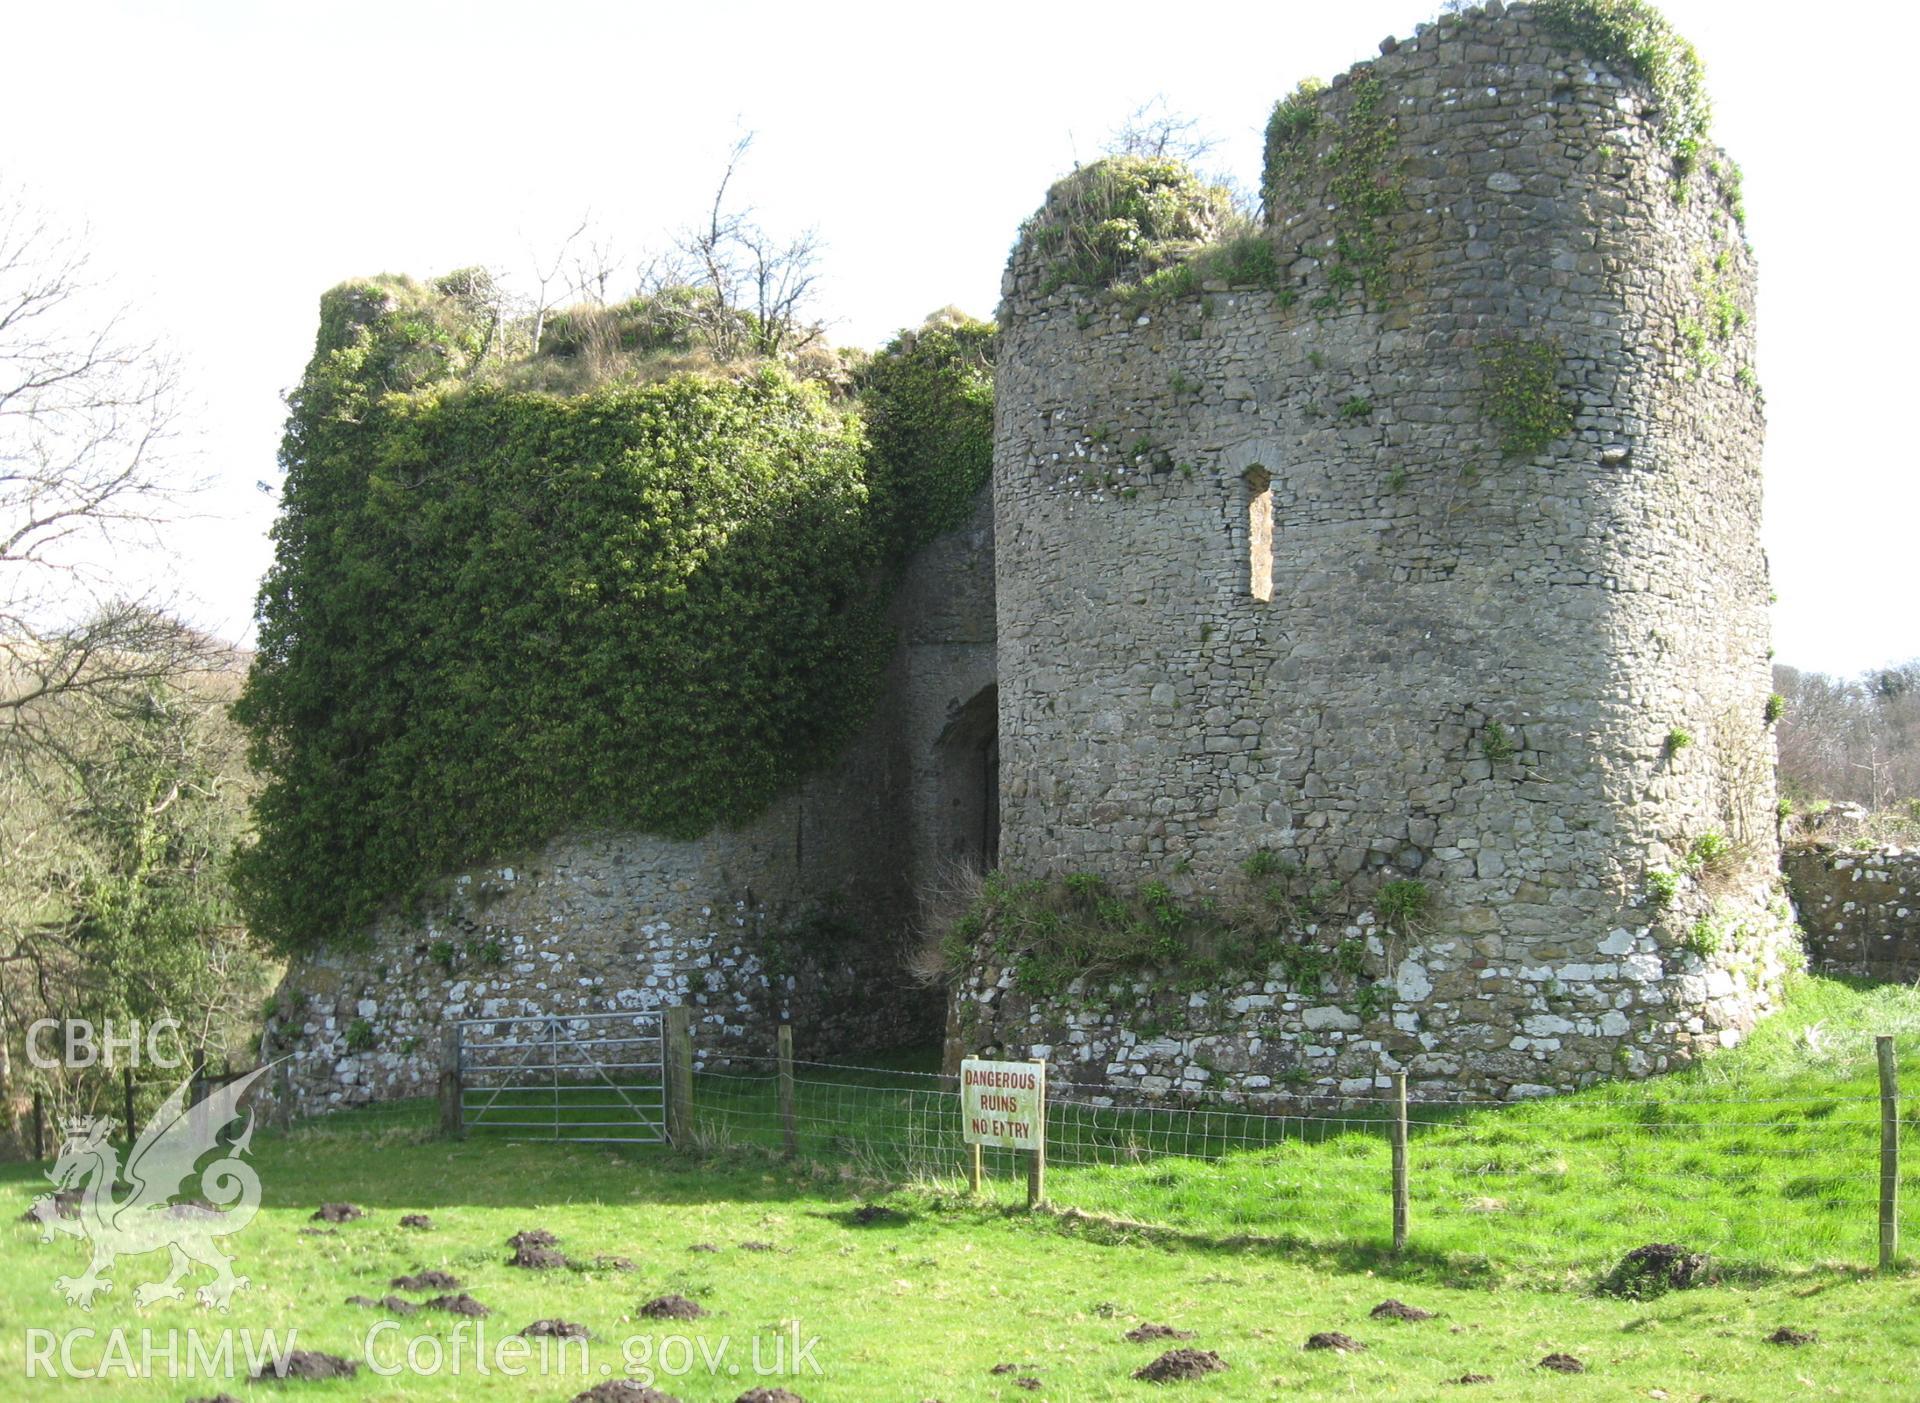 Colour photo of Penrice Castle, taken by Paul R. Davis, 11th January 2007.